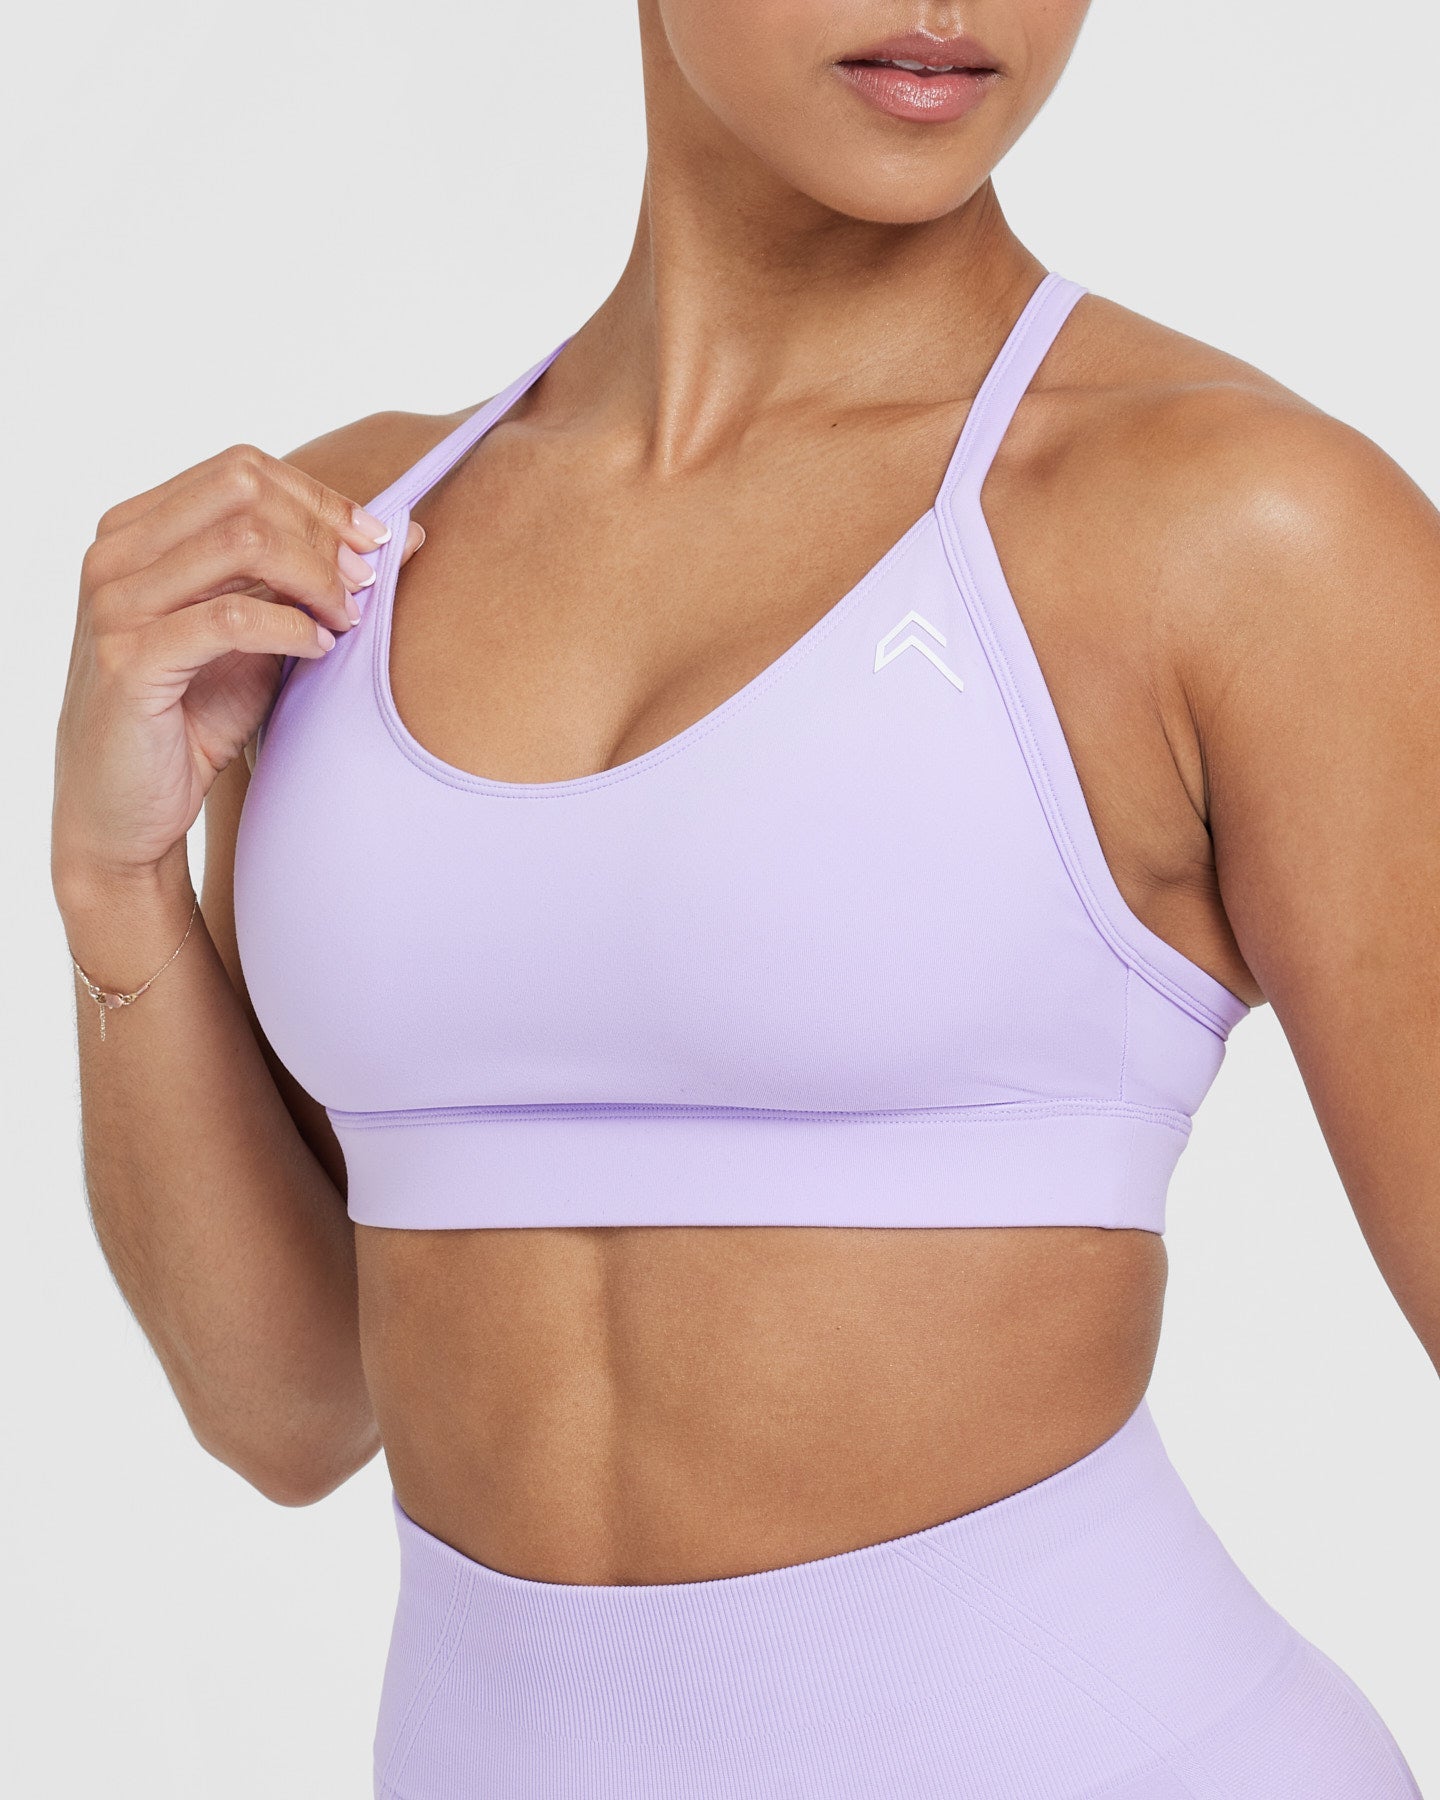 O'Neill Women's Advance Bra, Purple, Medium at  Women's Clothing  store: Sports Bras